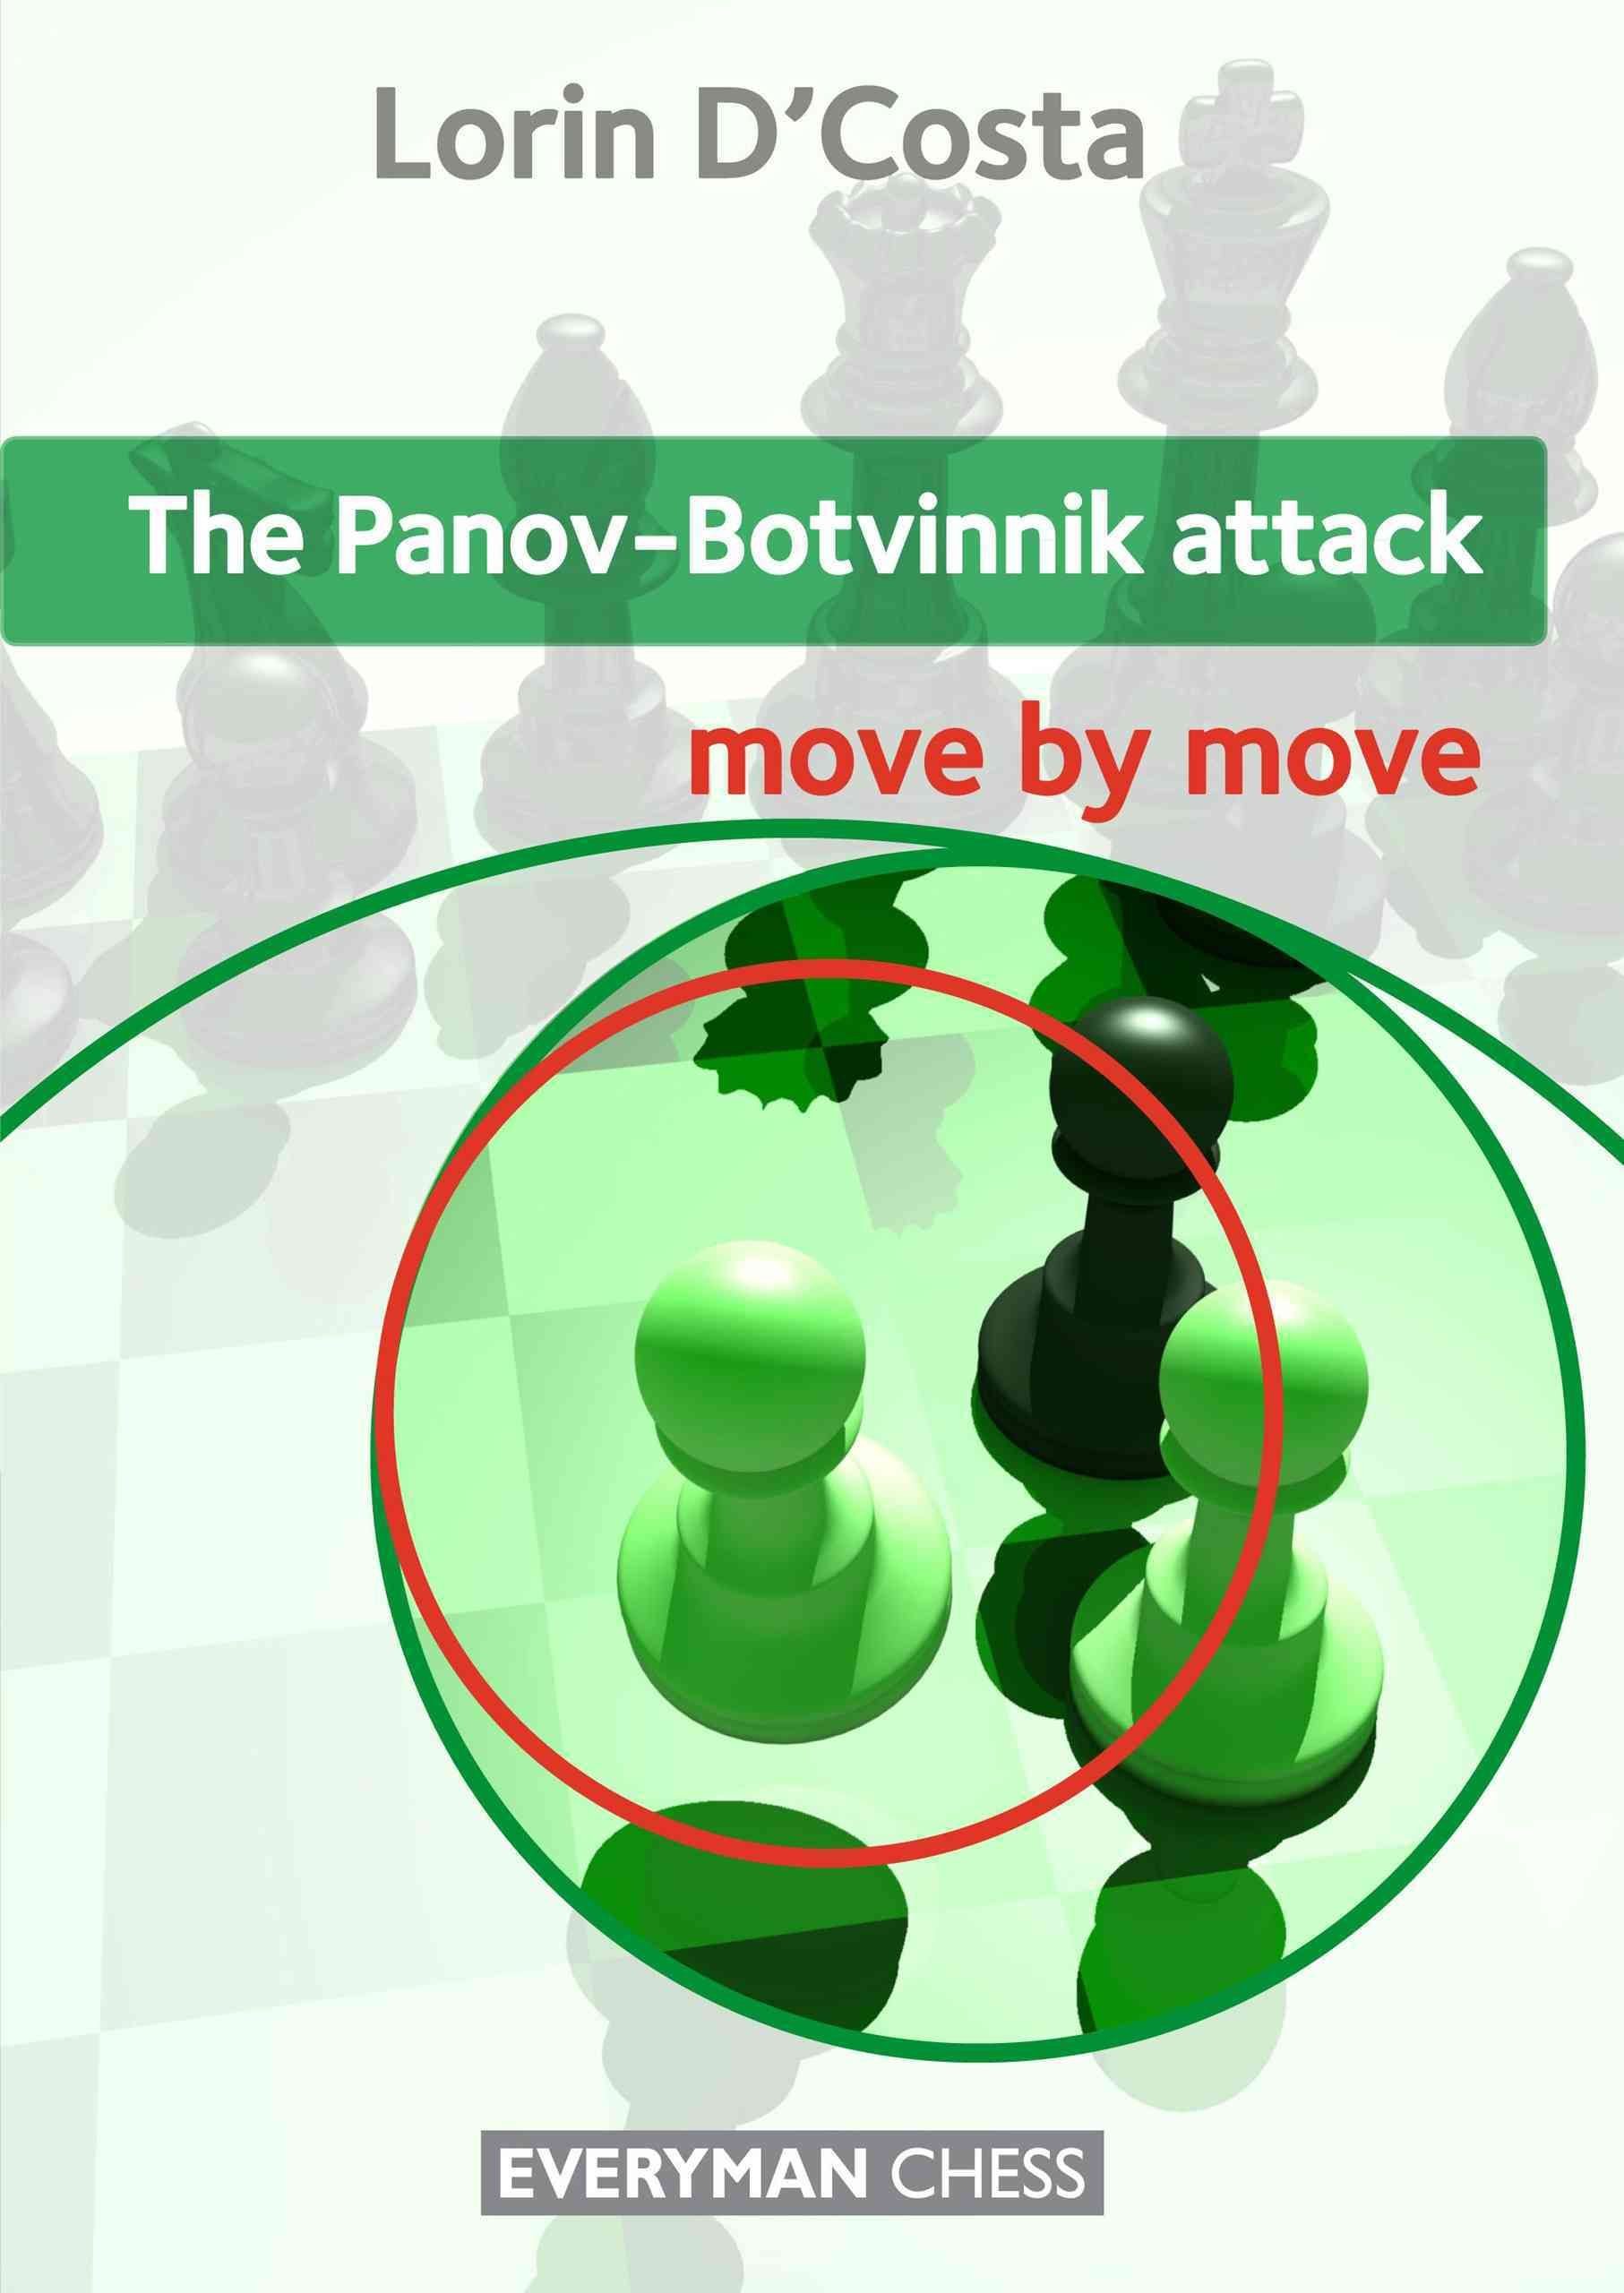 Alekhine Defence: Move by Move: Lakdawala, Cyrus: 9781781941669:  : Books